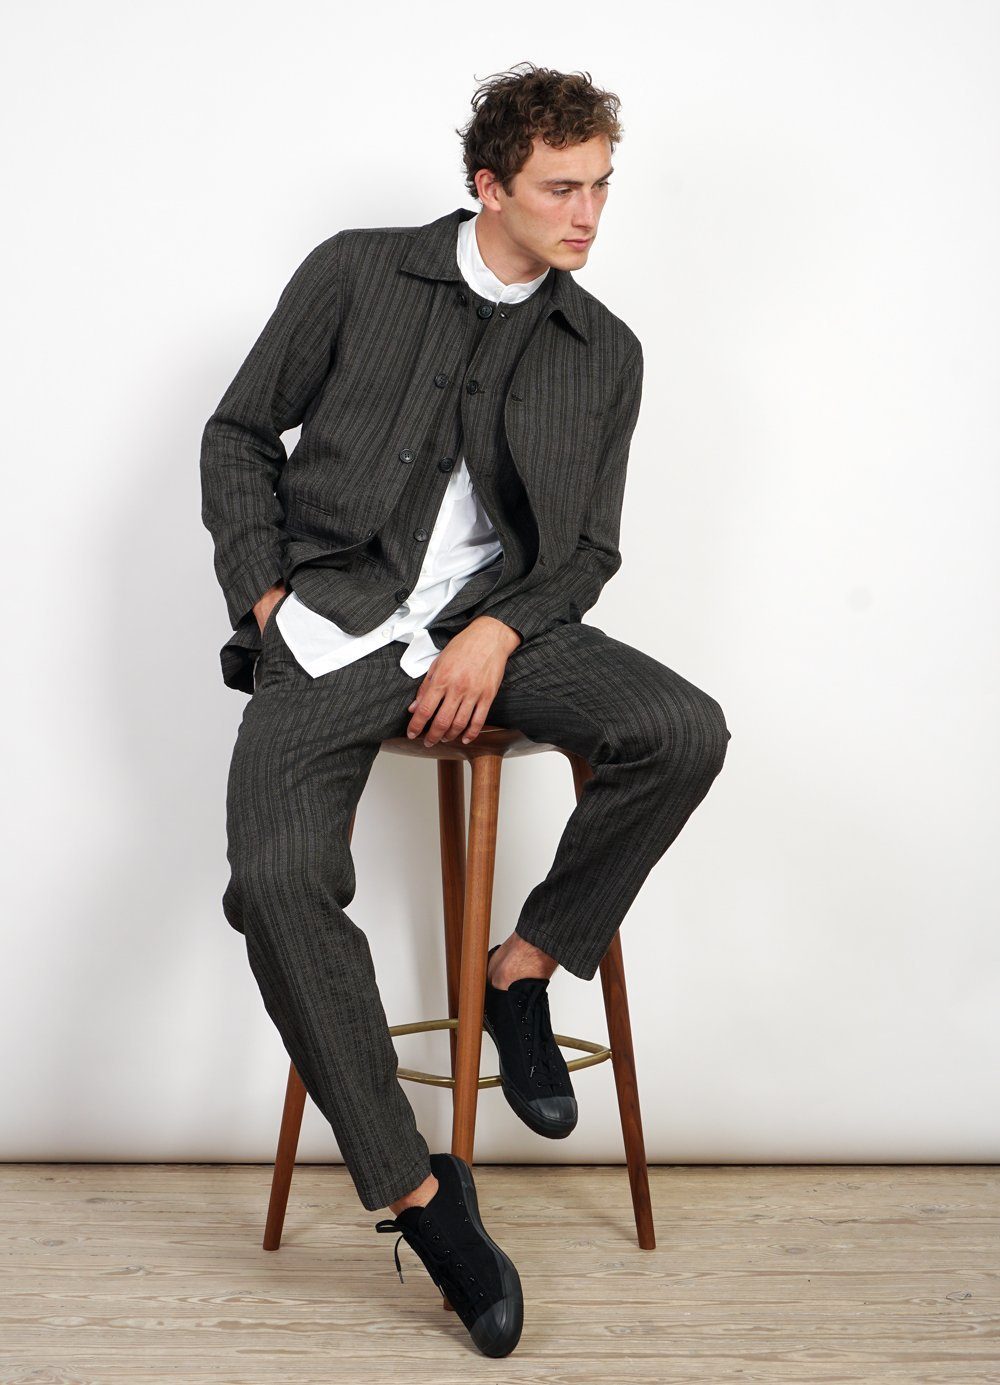 BEN | Crewneck Waistcoat| Taupe Stripes -HANSEN Garments- HANSEN Garments